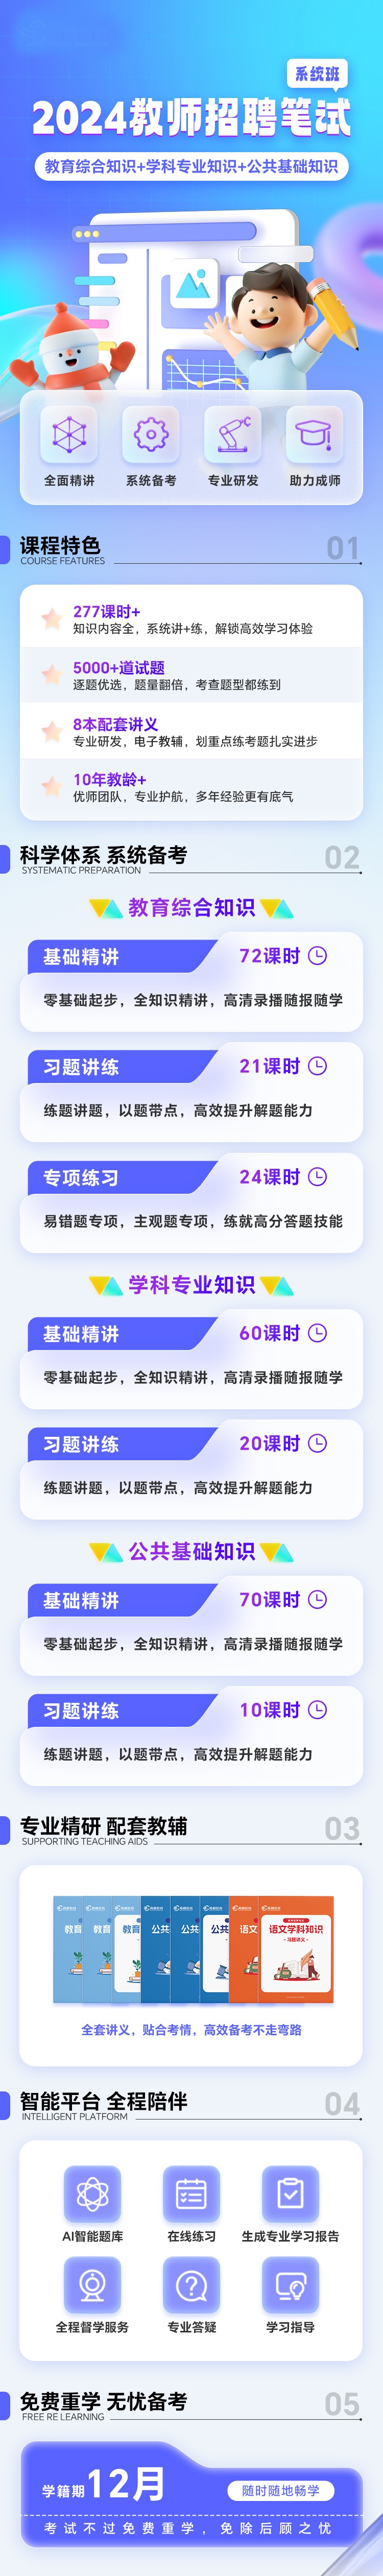 https://simg01.gaodunwangxiao.com/uploadfiles/product-center/202404/19/f7c82_20240419165204.jpg